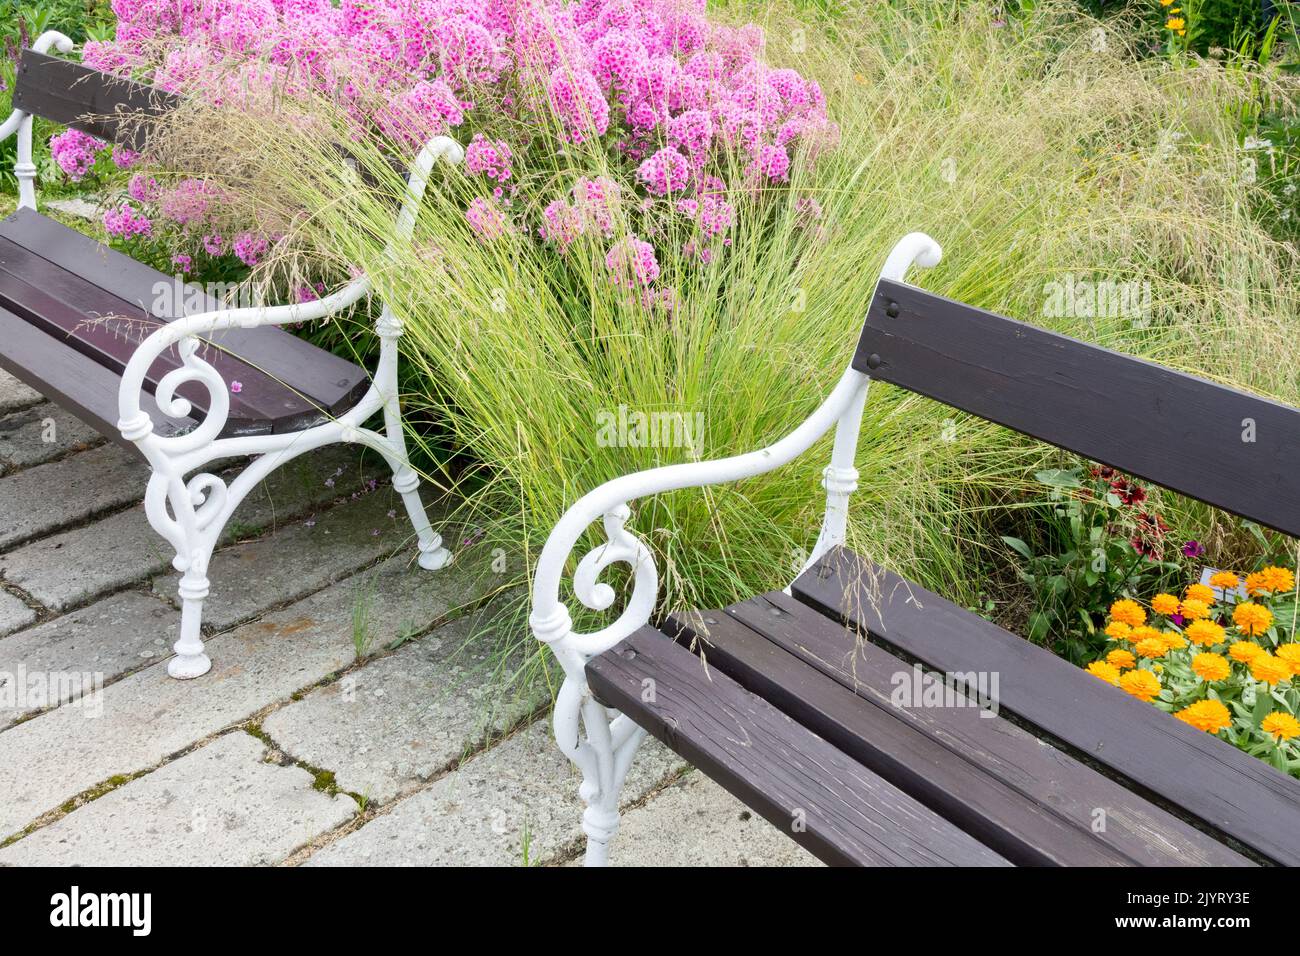 Relax luogo giardino Fiori rosa, Giardino phlox, due panchine in giardino, tranquillo, posto posto posto posto a sedere confine erbaceo Foto Stock